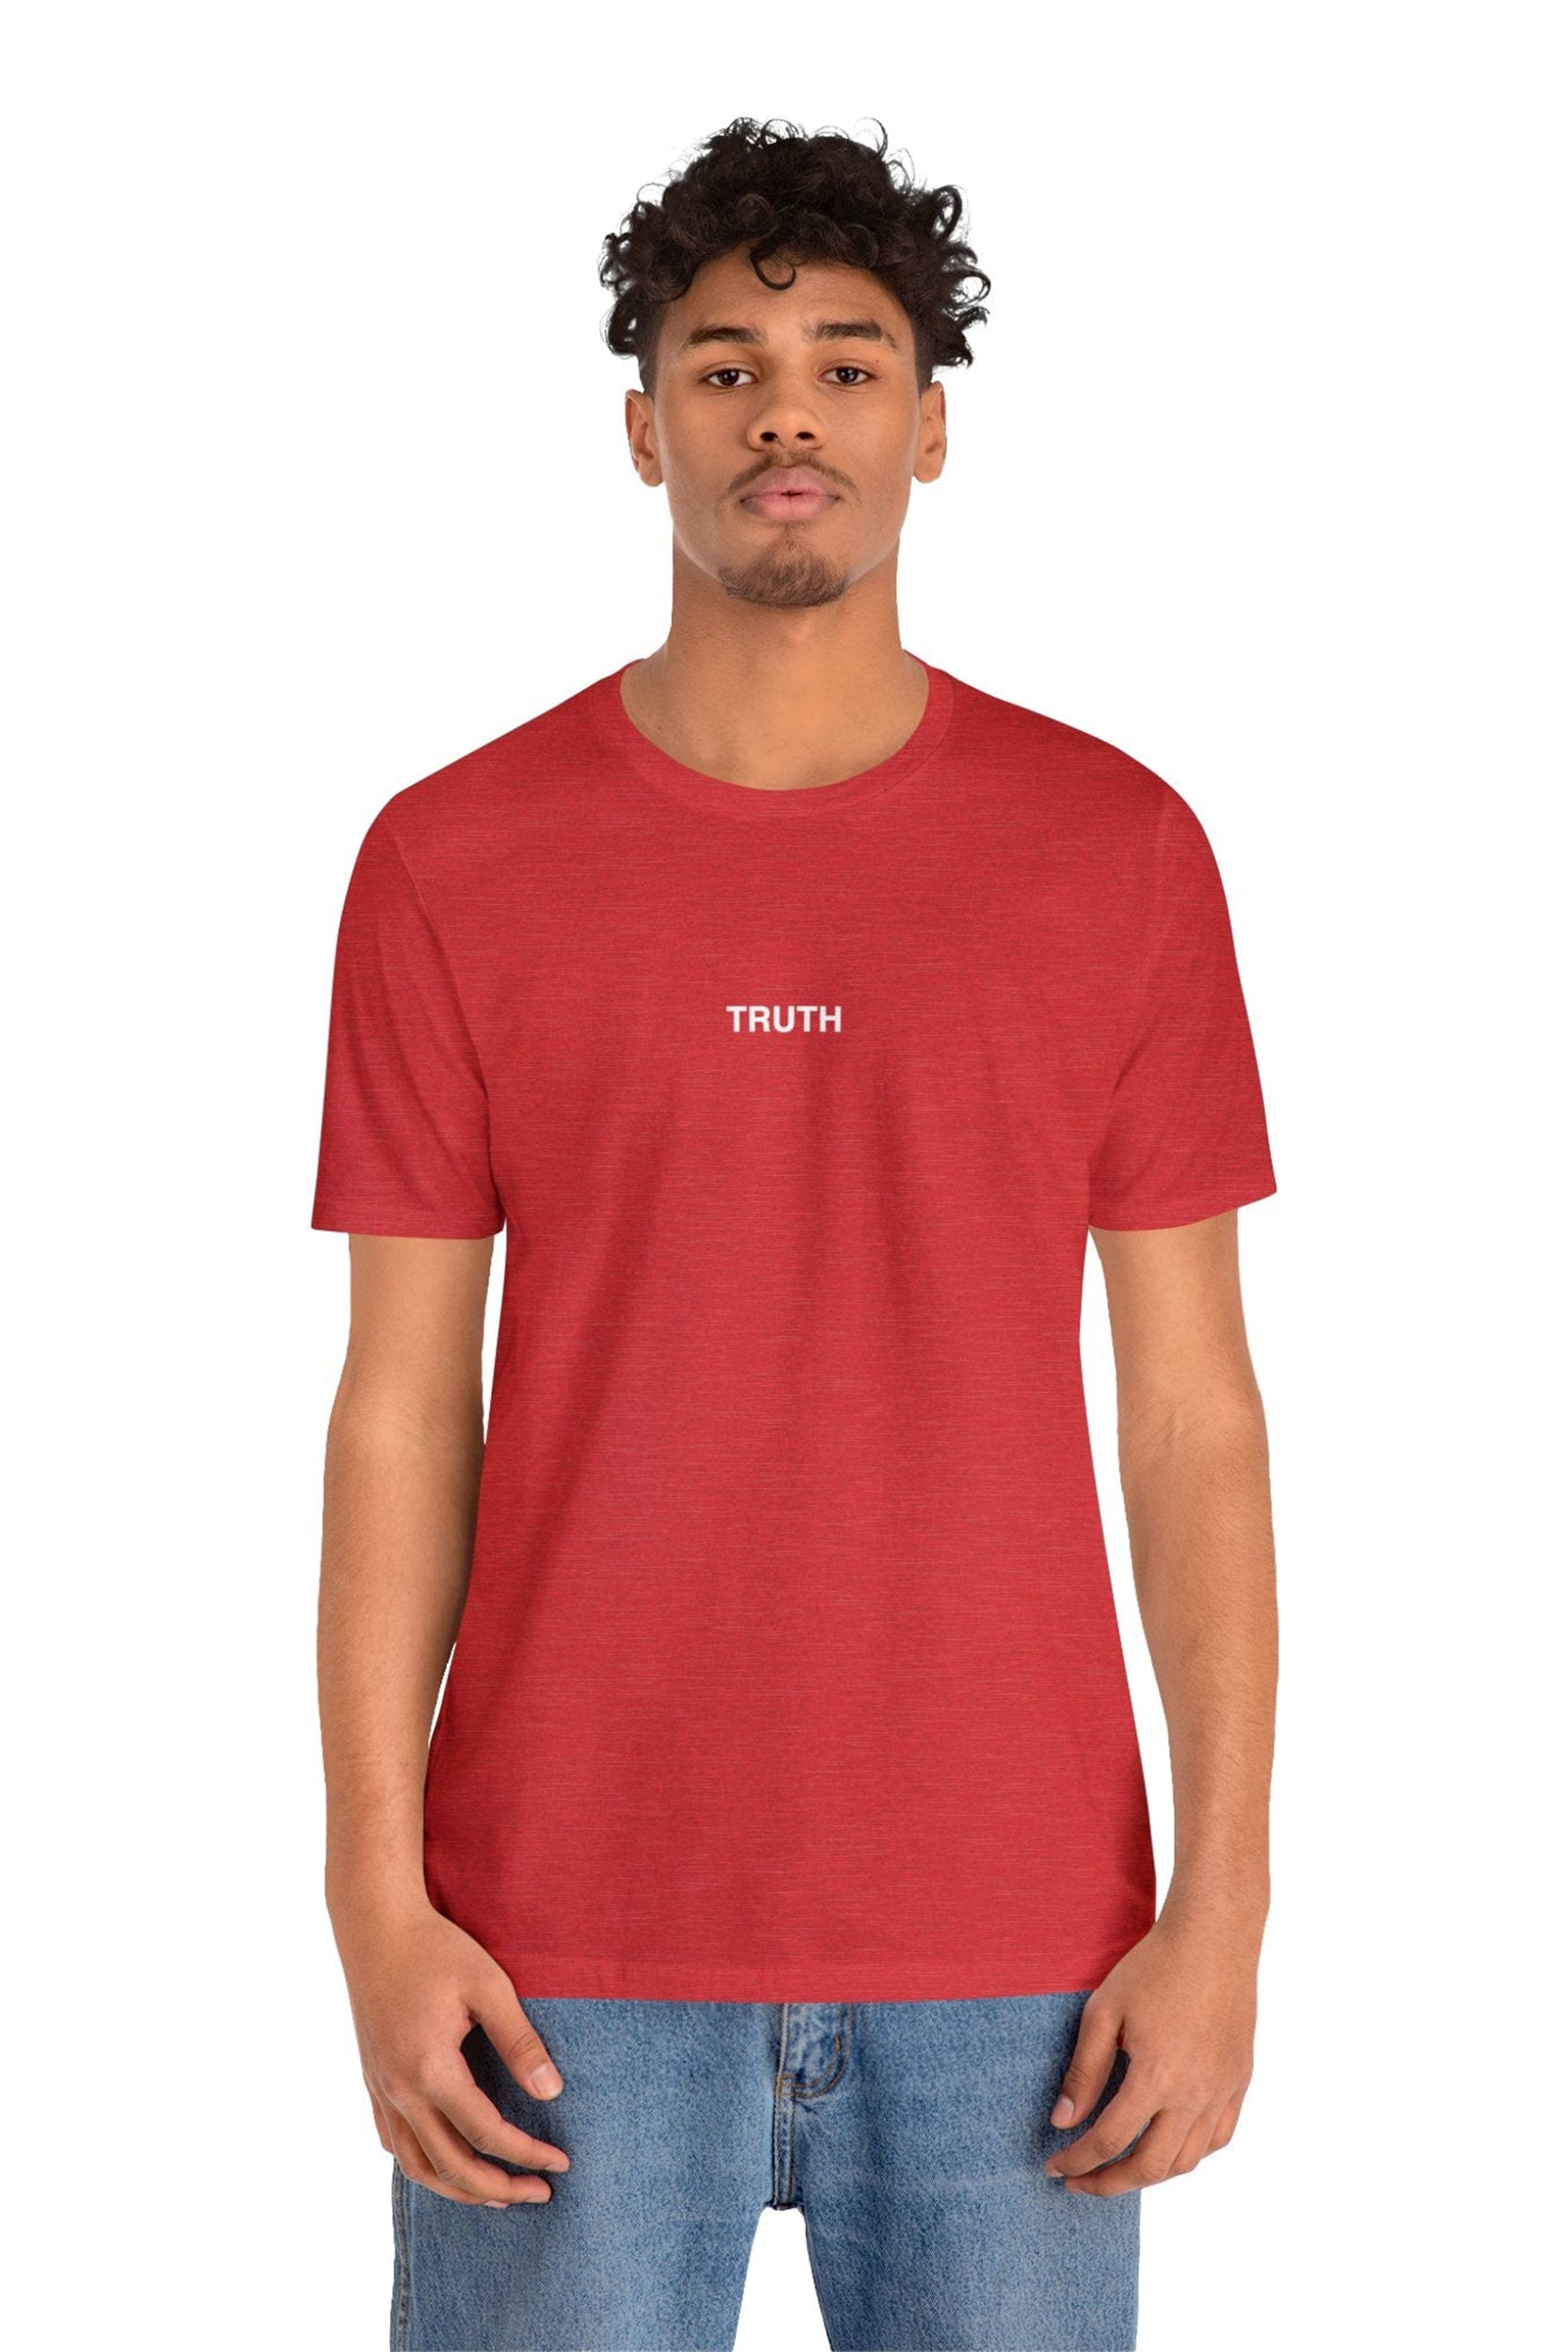 "TRUTH" T-Shirt